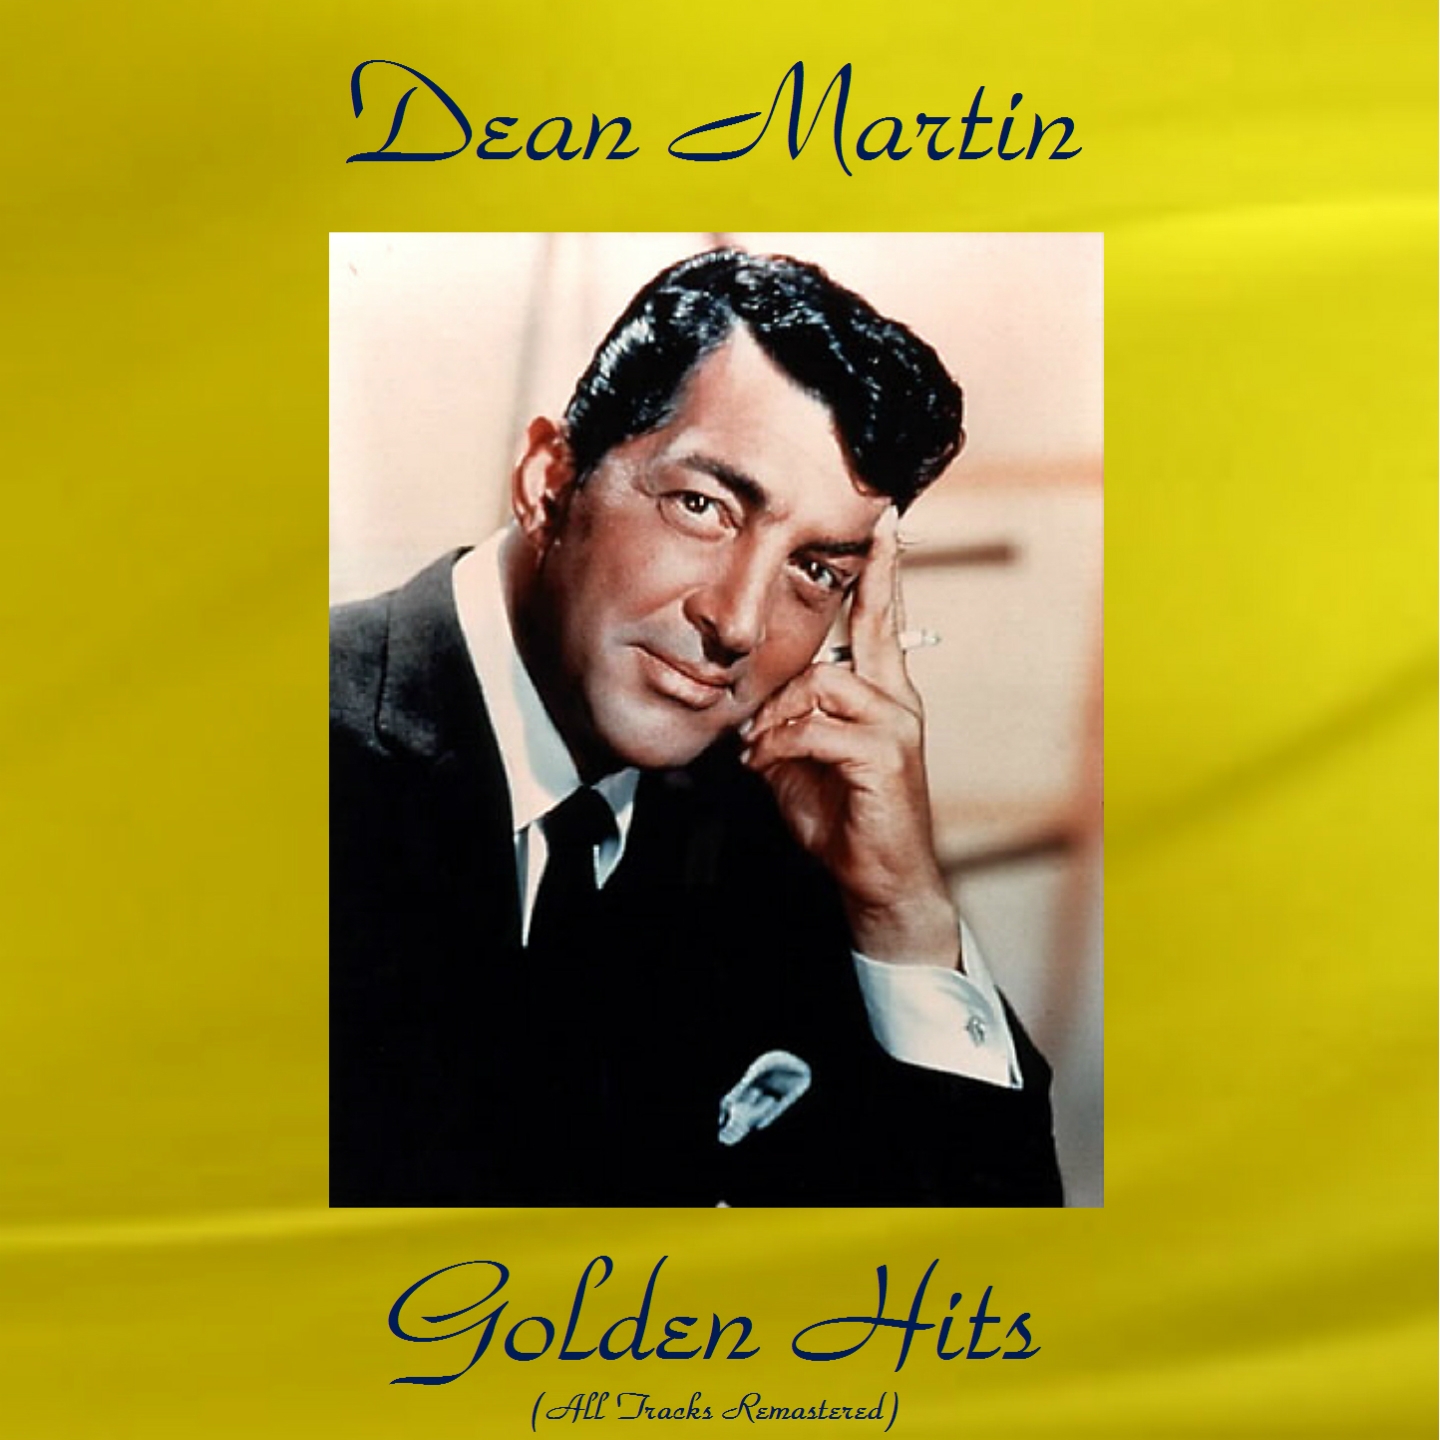 Dean Martin Golden Hits (All Tracks Remastered)